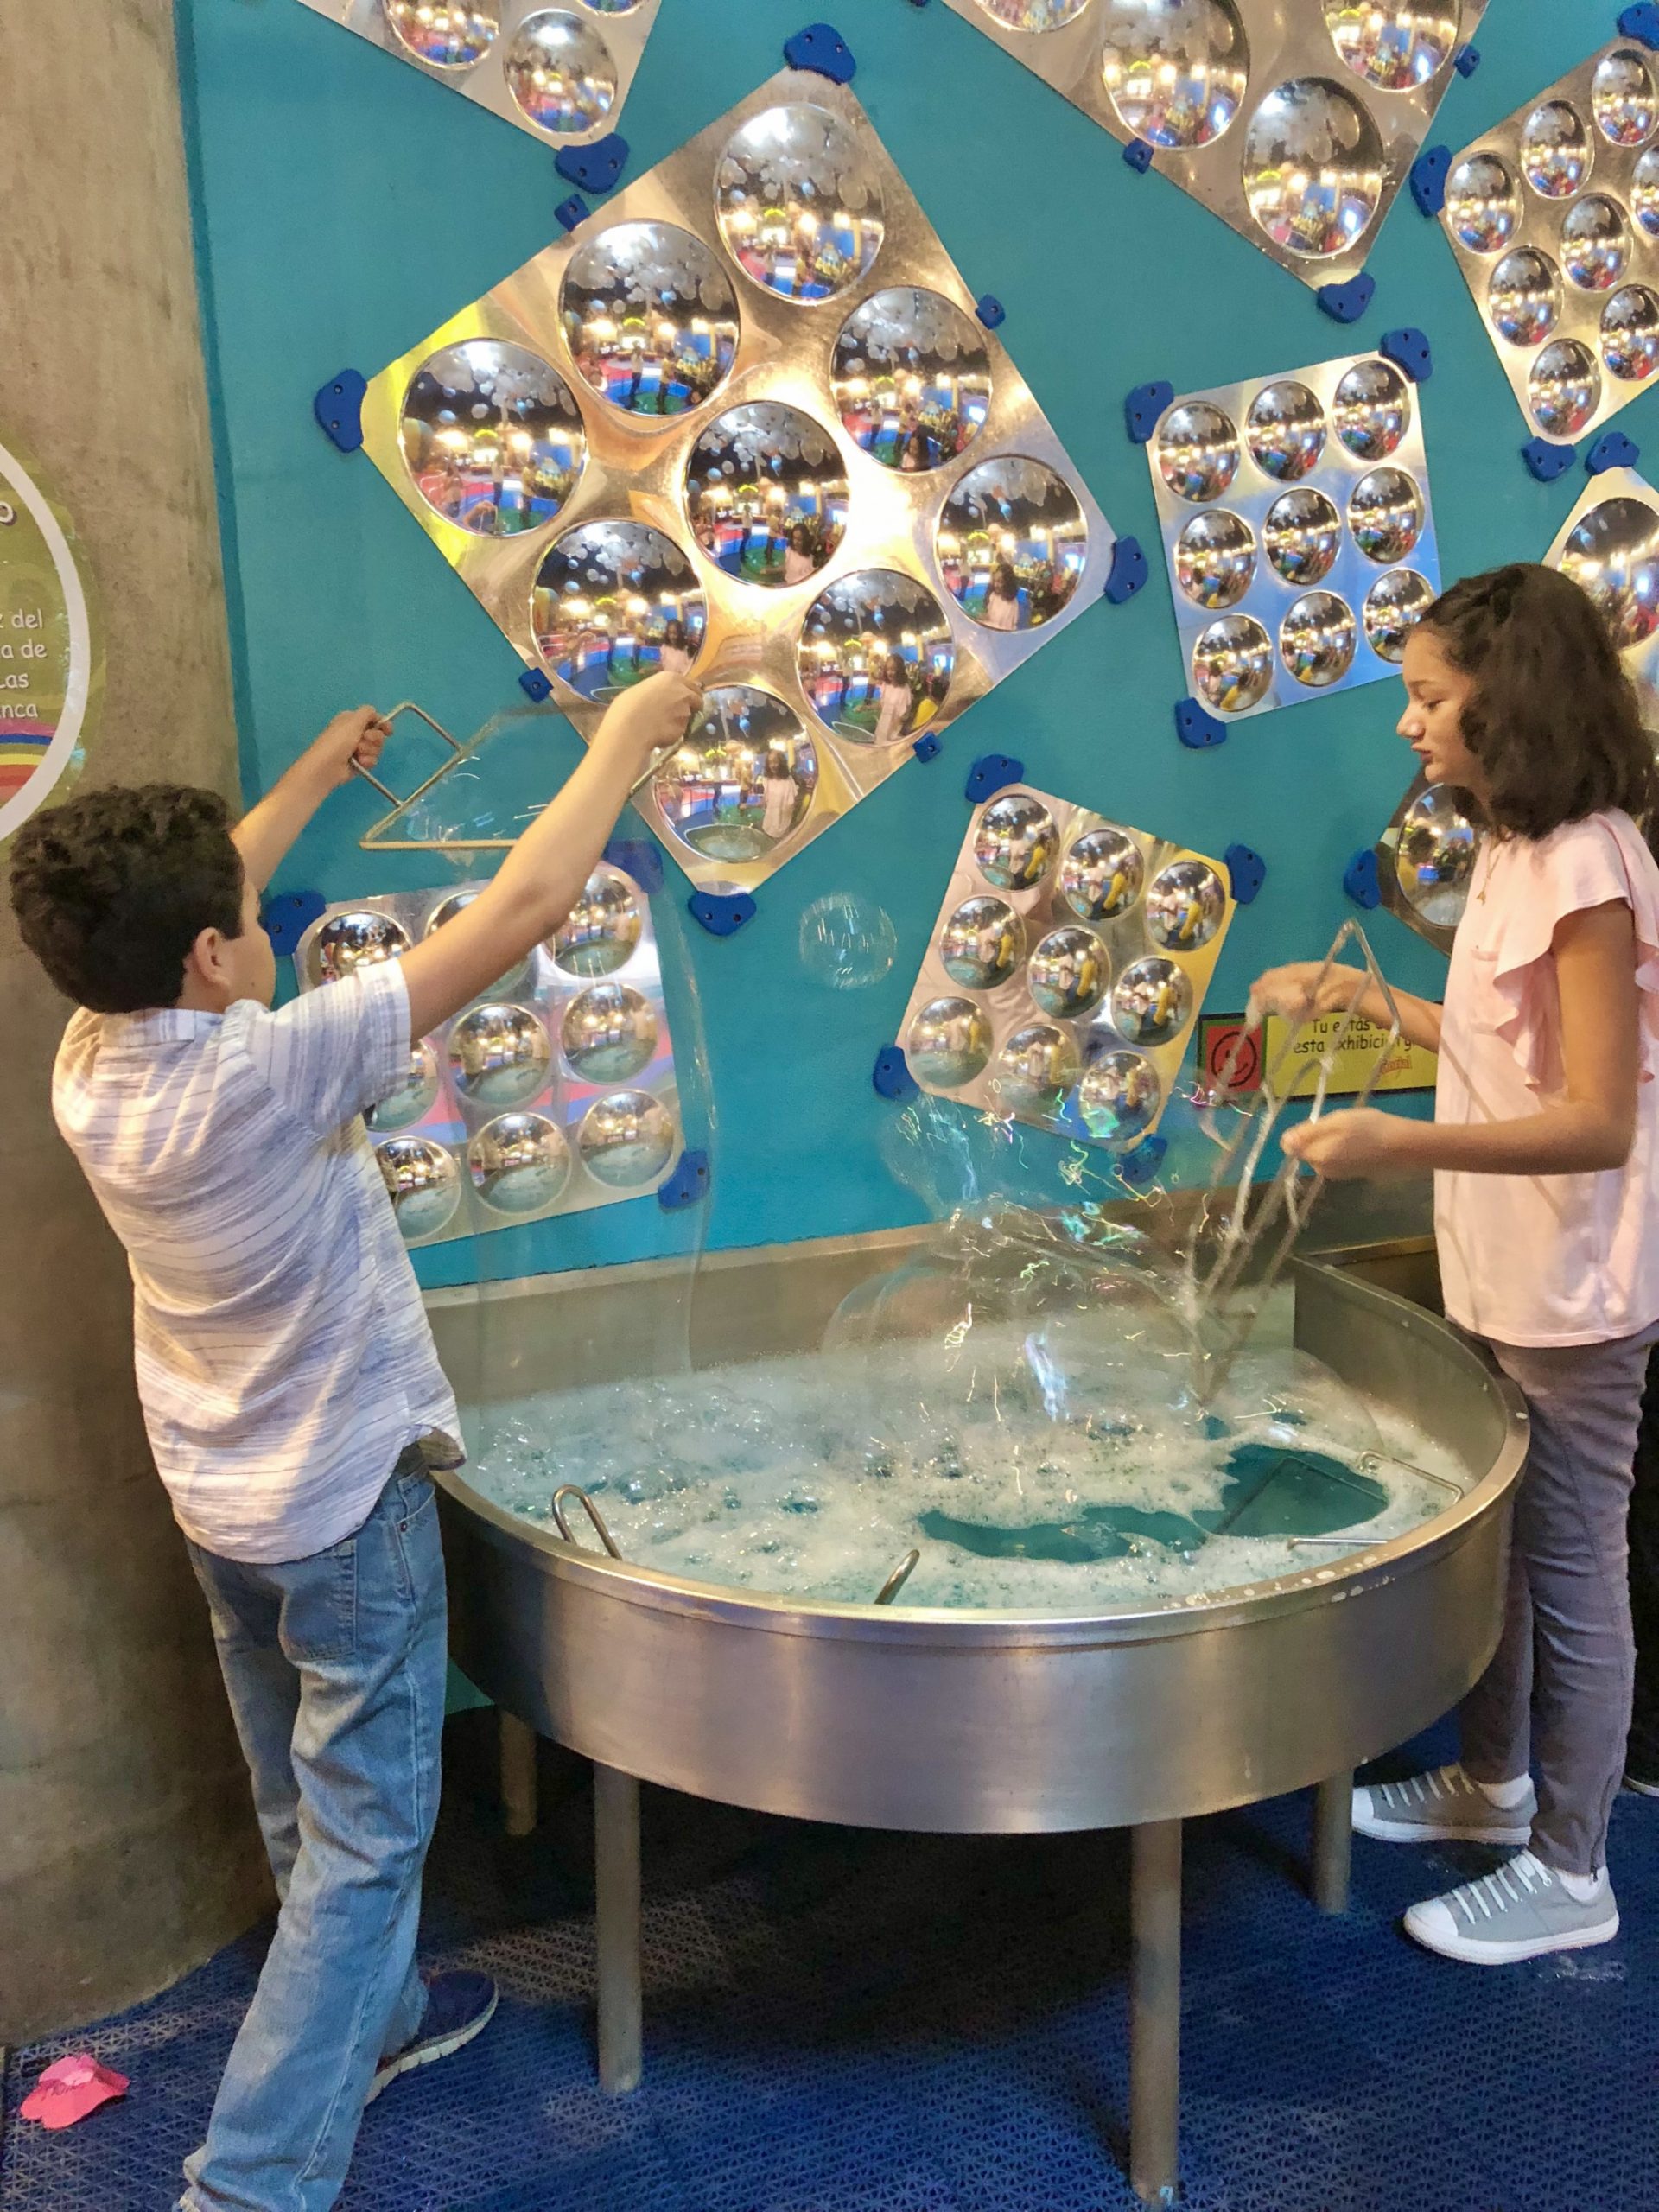 Bubble making at Children's museum, Guatemala City